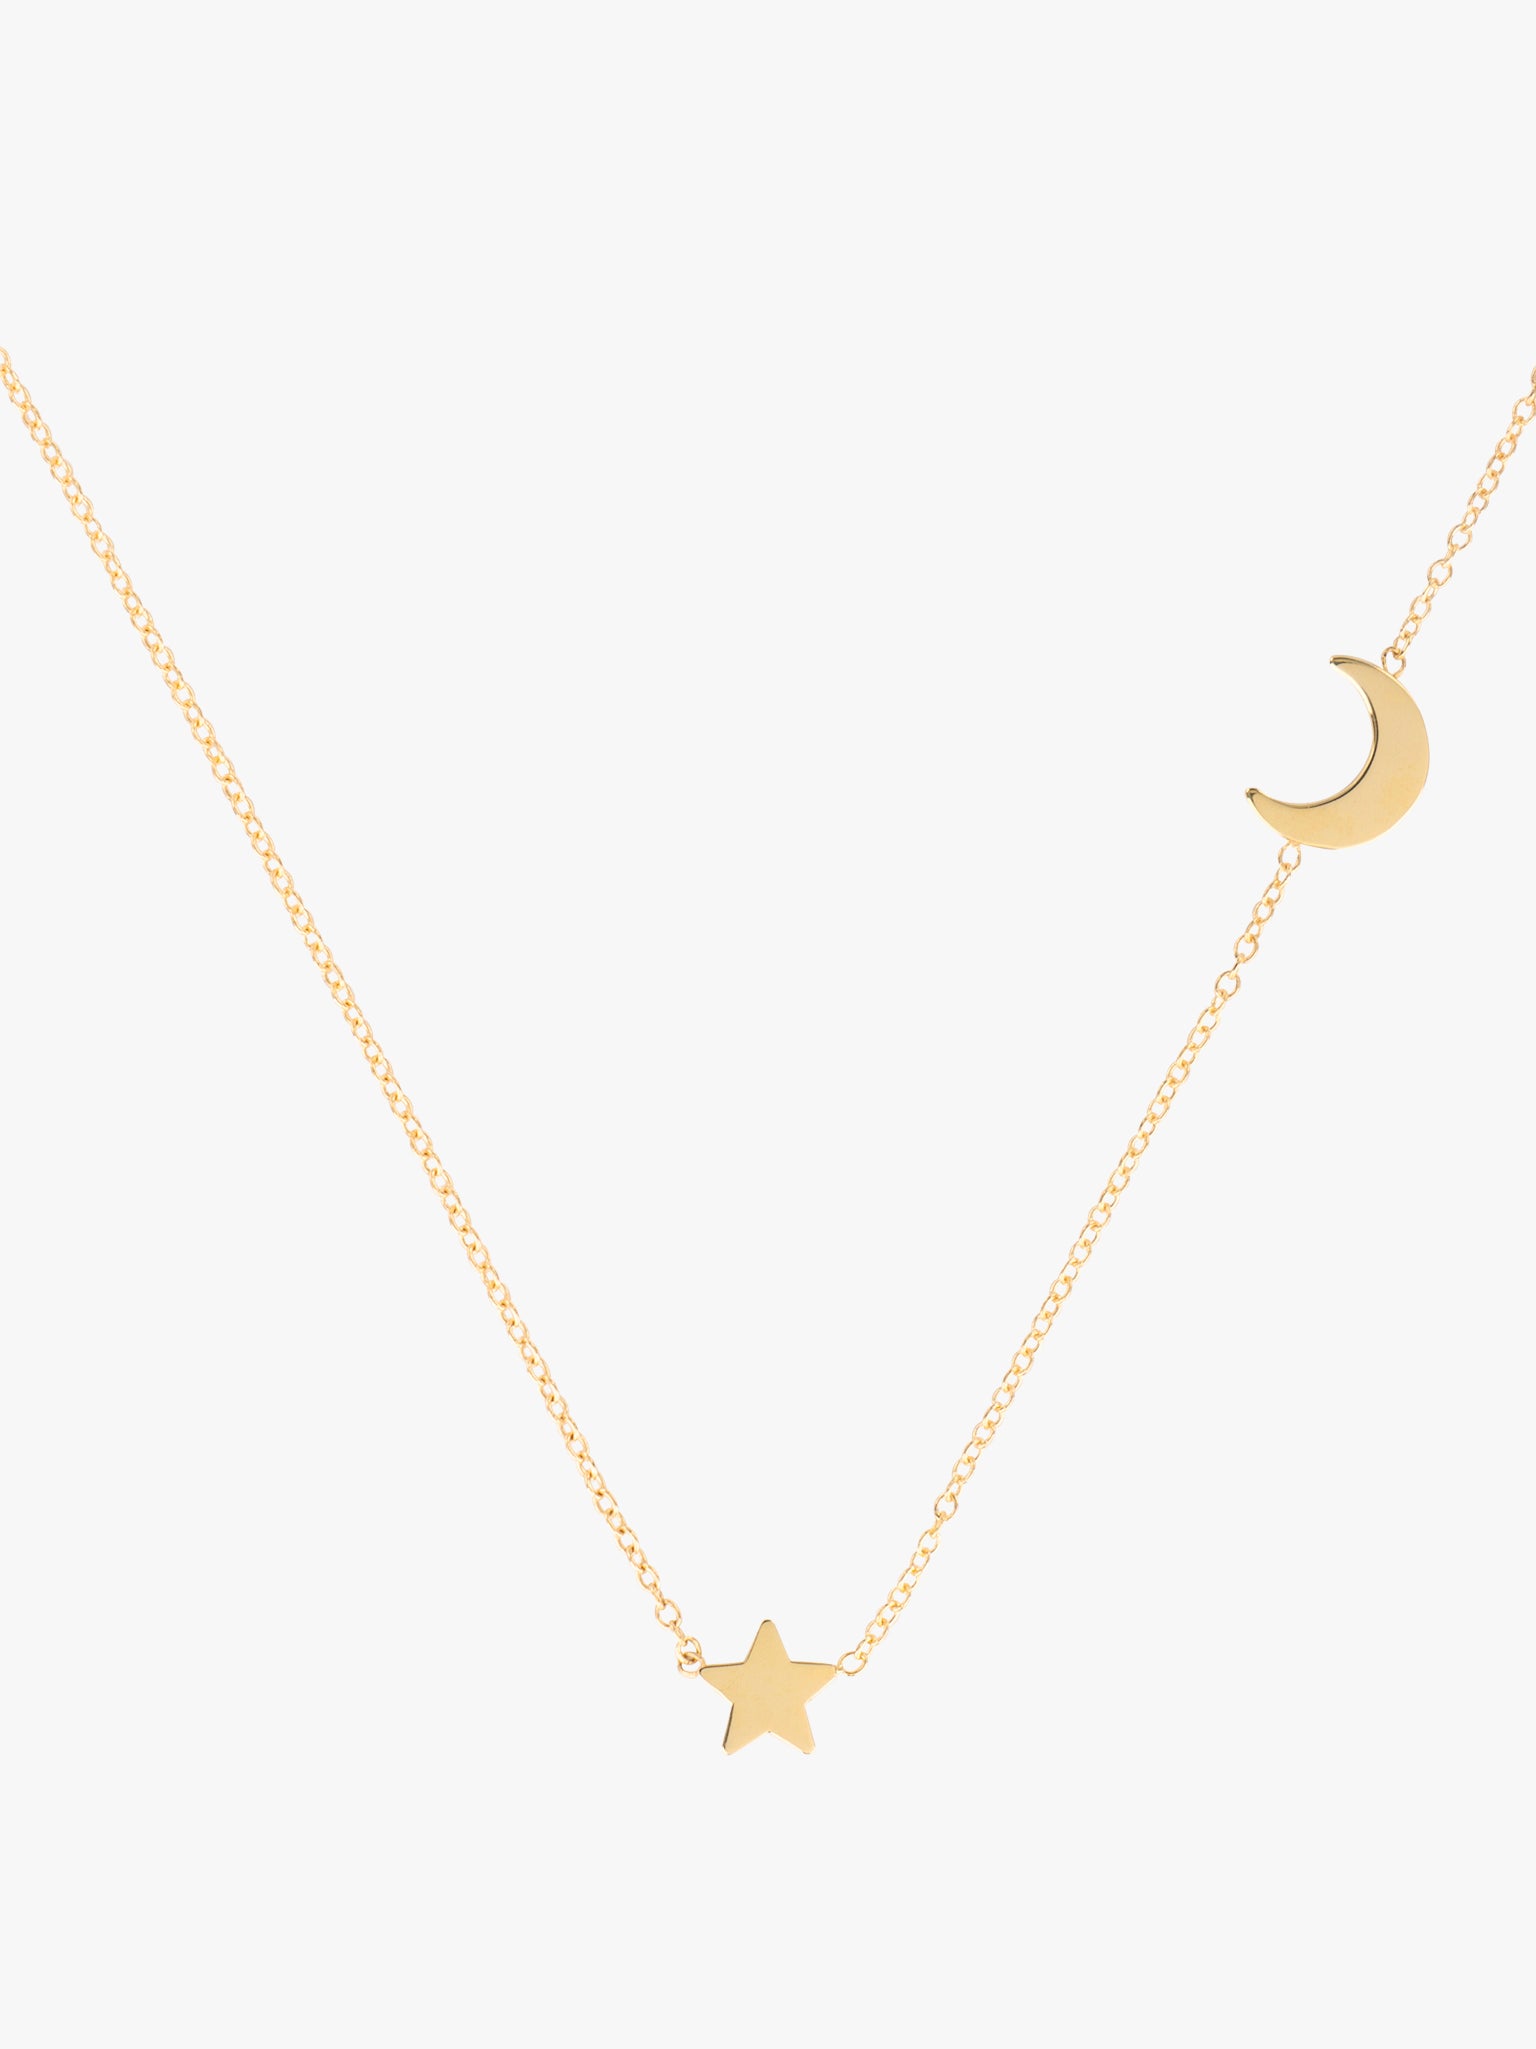 Starry night necklace